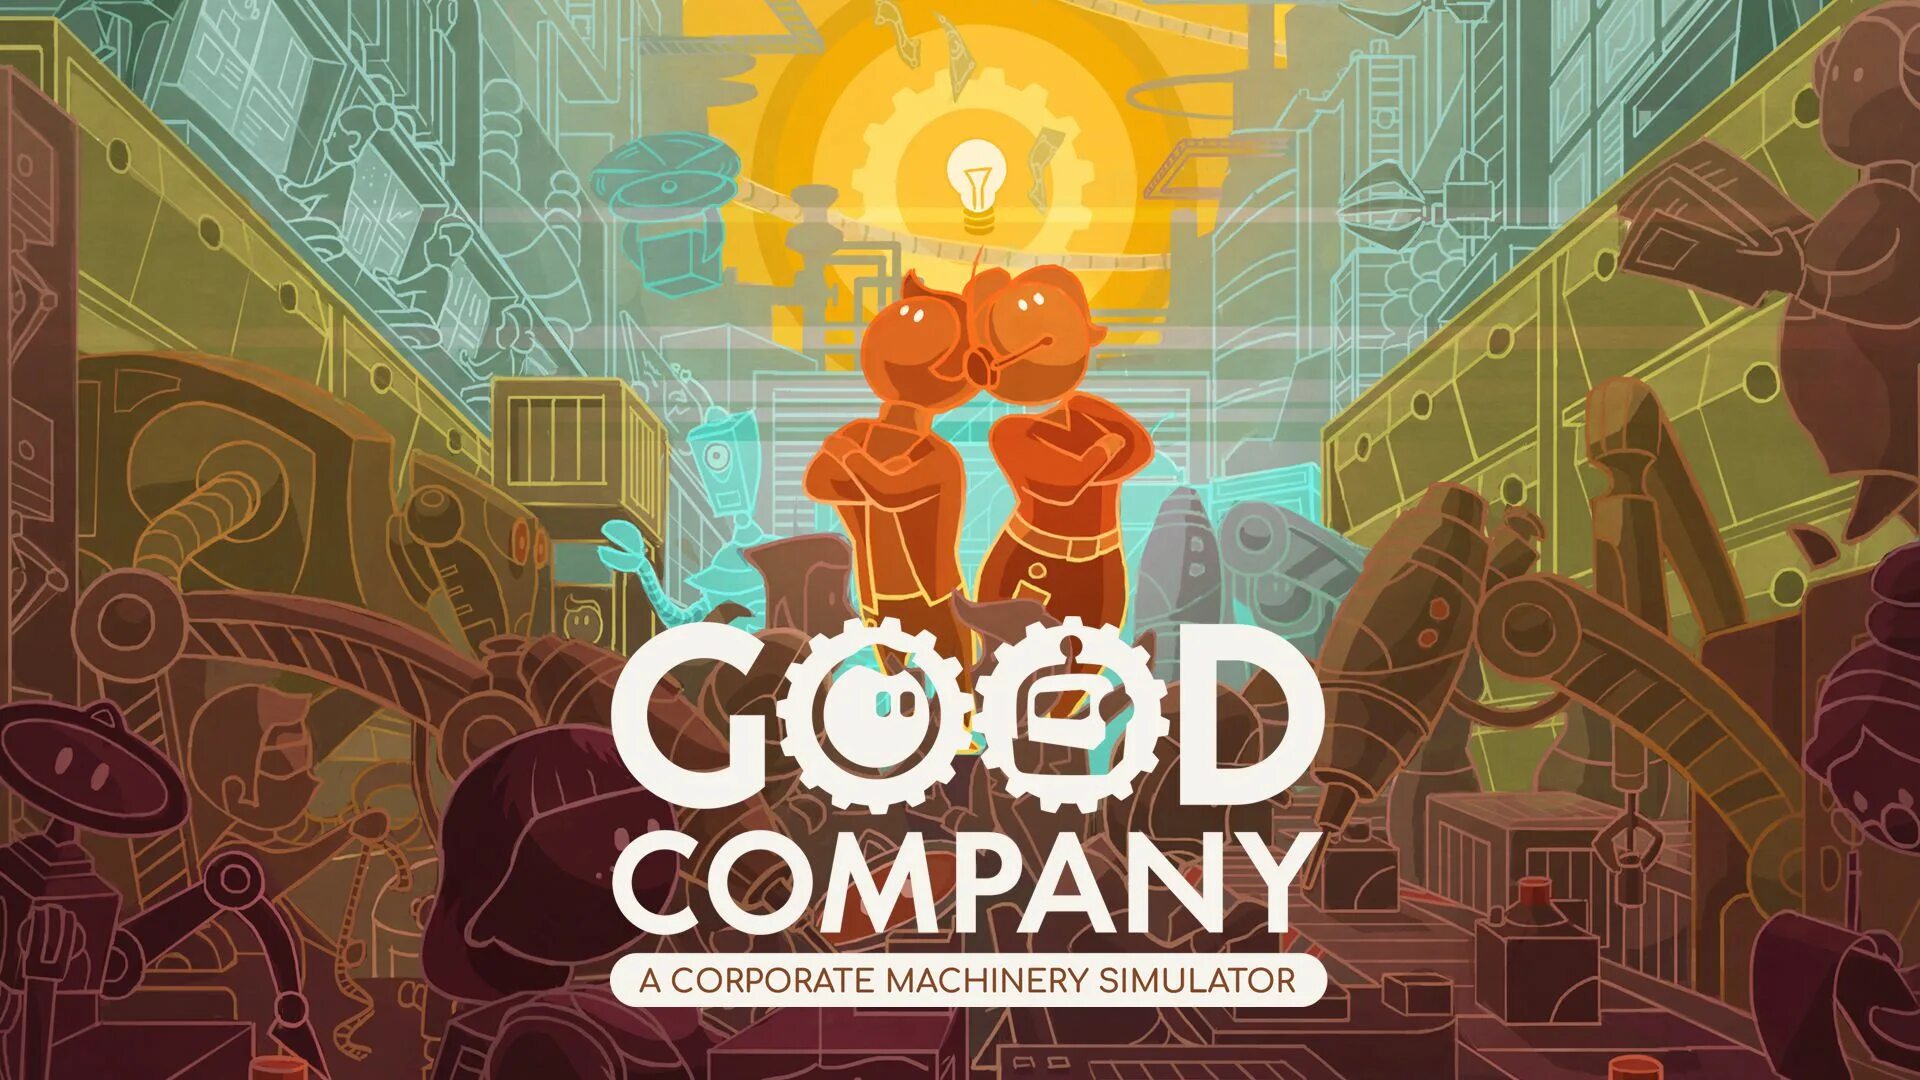 My good company. Good Company. The Company игра. Лучшие игры для компании. Good Company game.